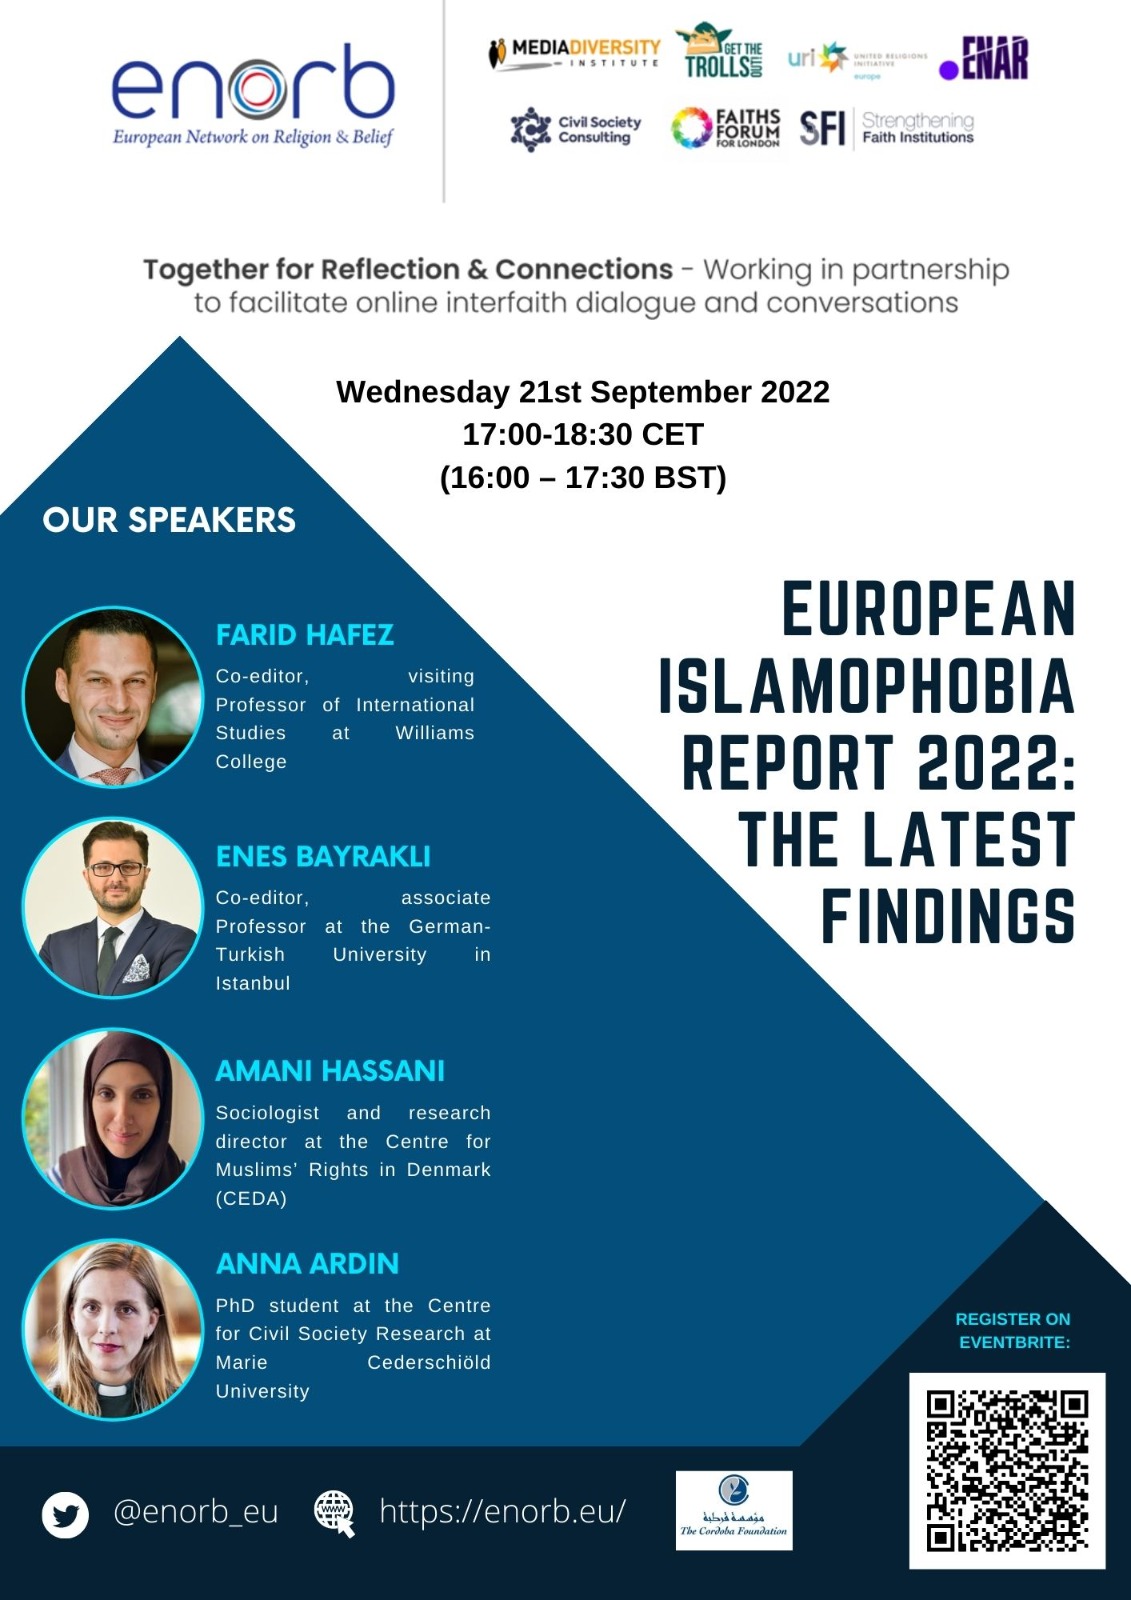 European Islamophobia Report 2022: The Latest Findings